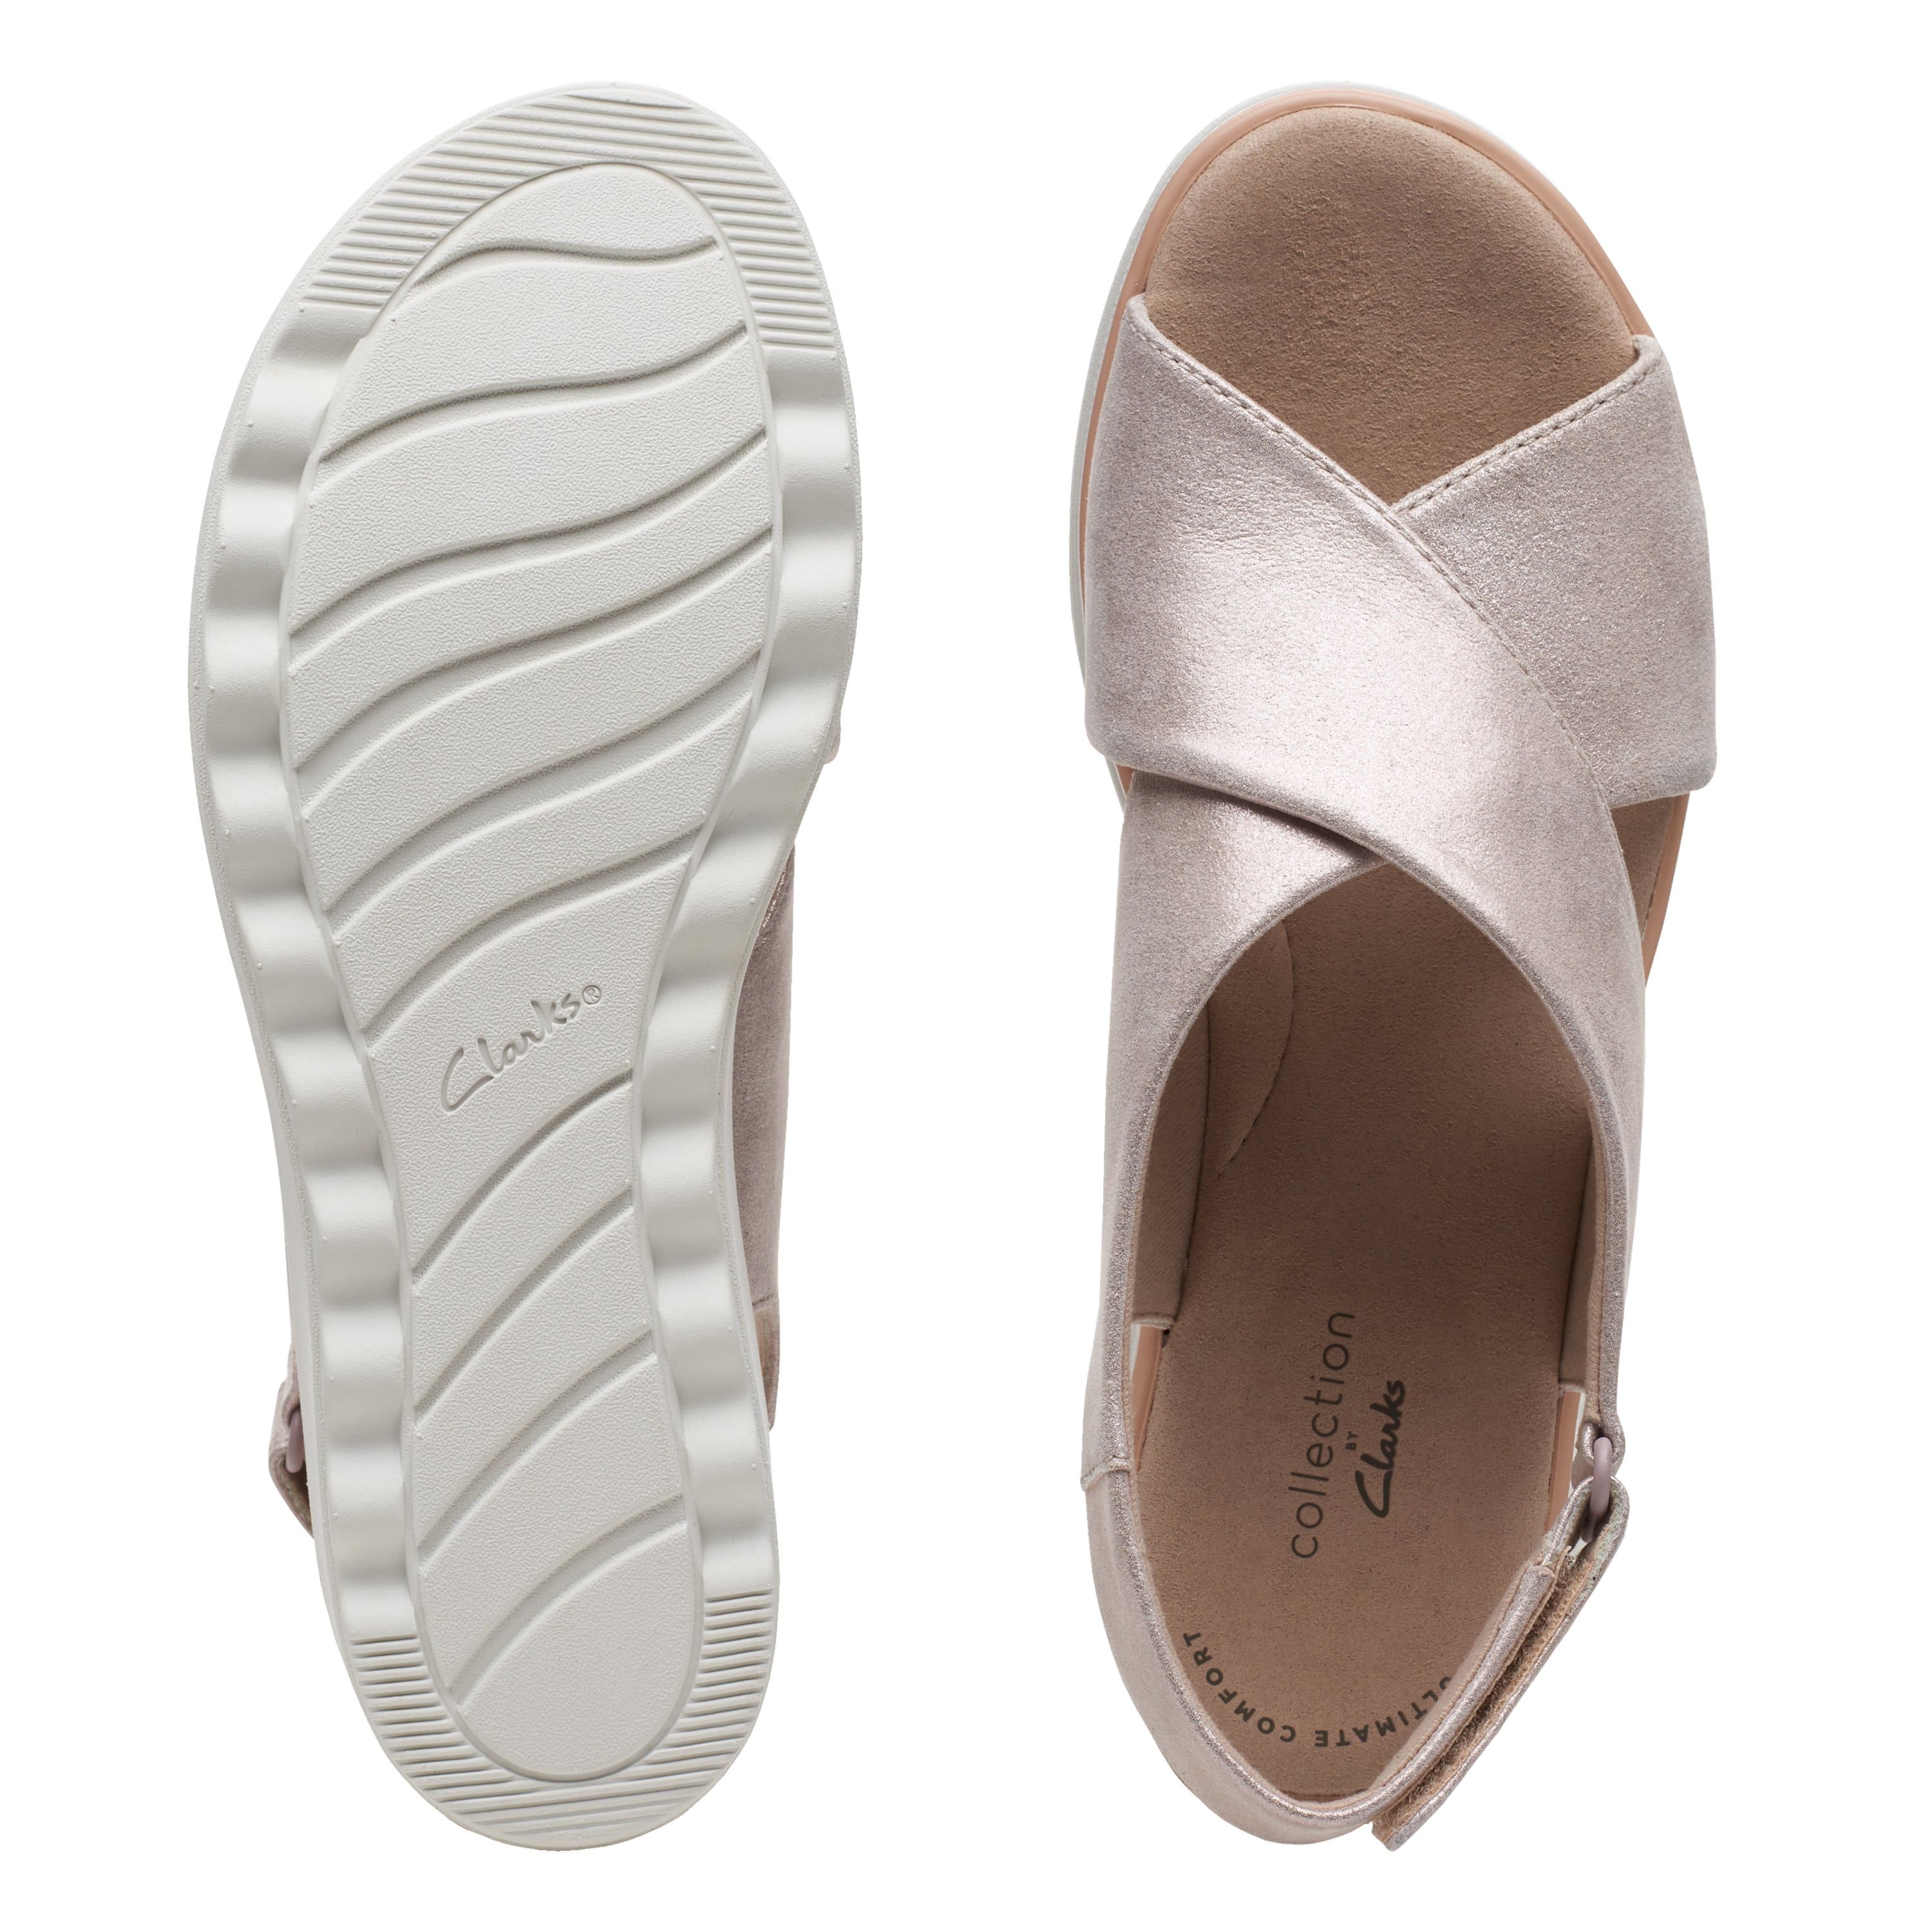 Clarks Jillian Jewel - Sandals - Lavender Metallic Leather - 261532624 - D Width (Standard Fit)